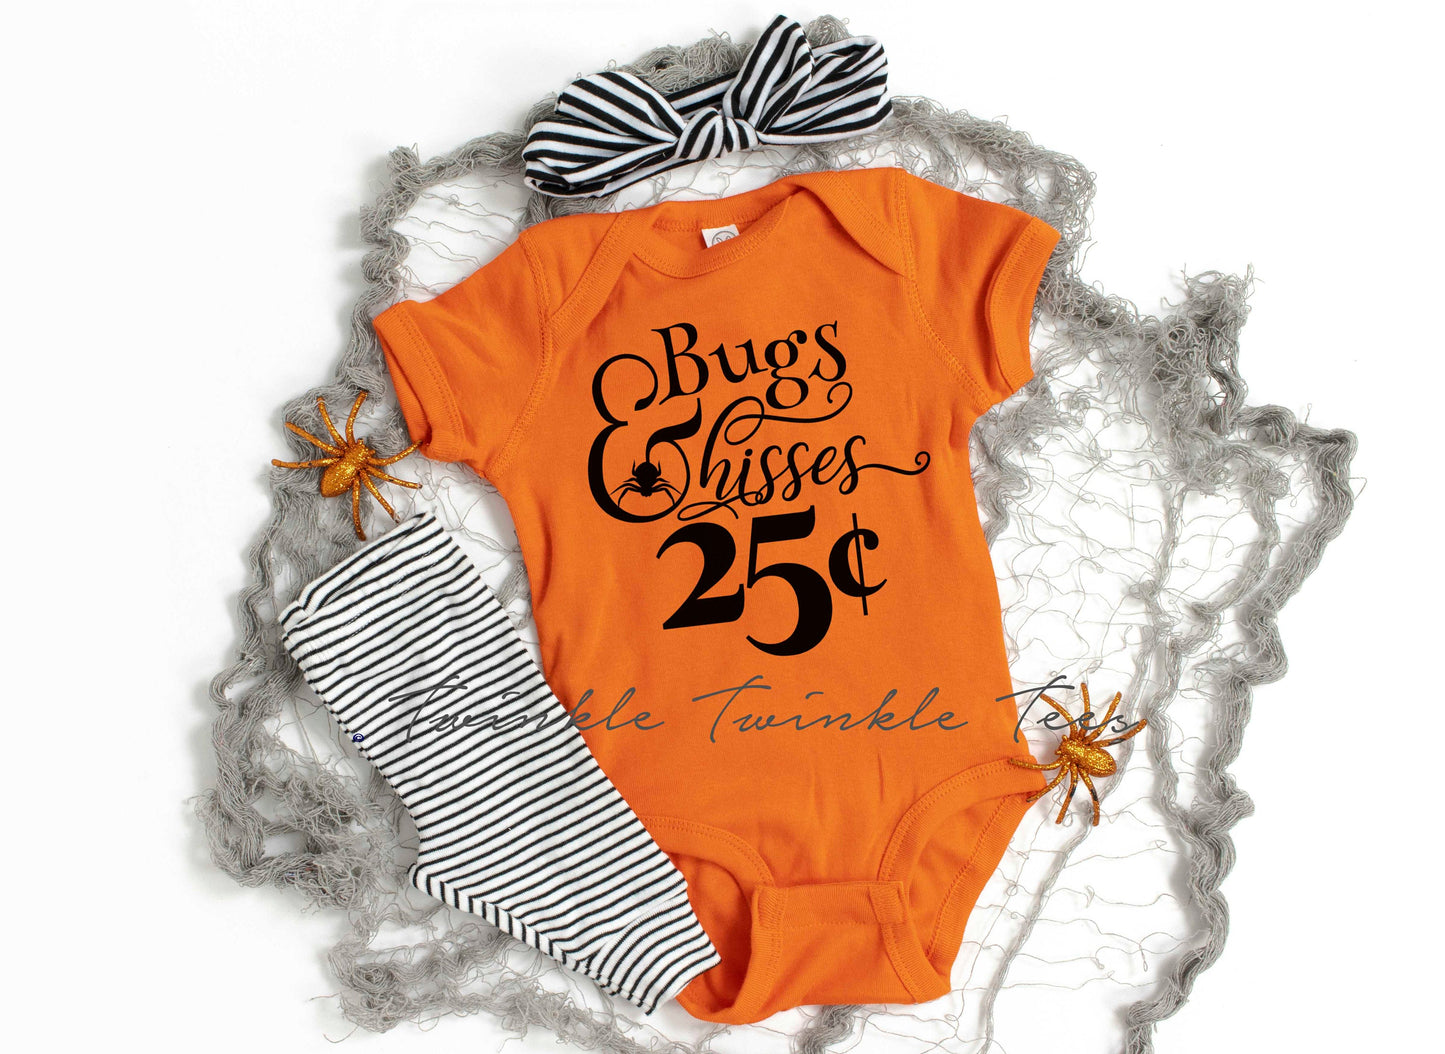 Bugs & Hisses 25 cents Halloween Shirt or Bodysuit - My First Halloween - baby halloween - baby girl halloween shirt - boy halloween shirt